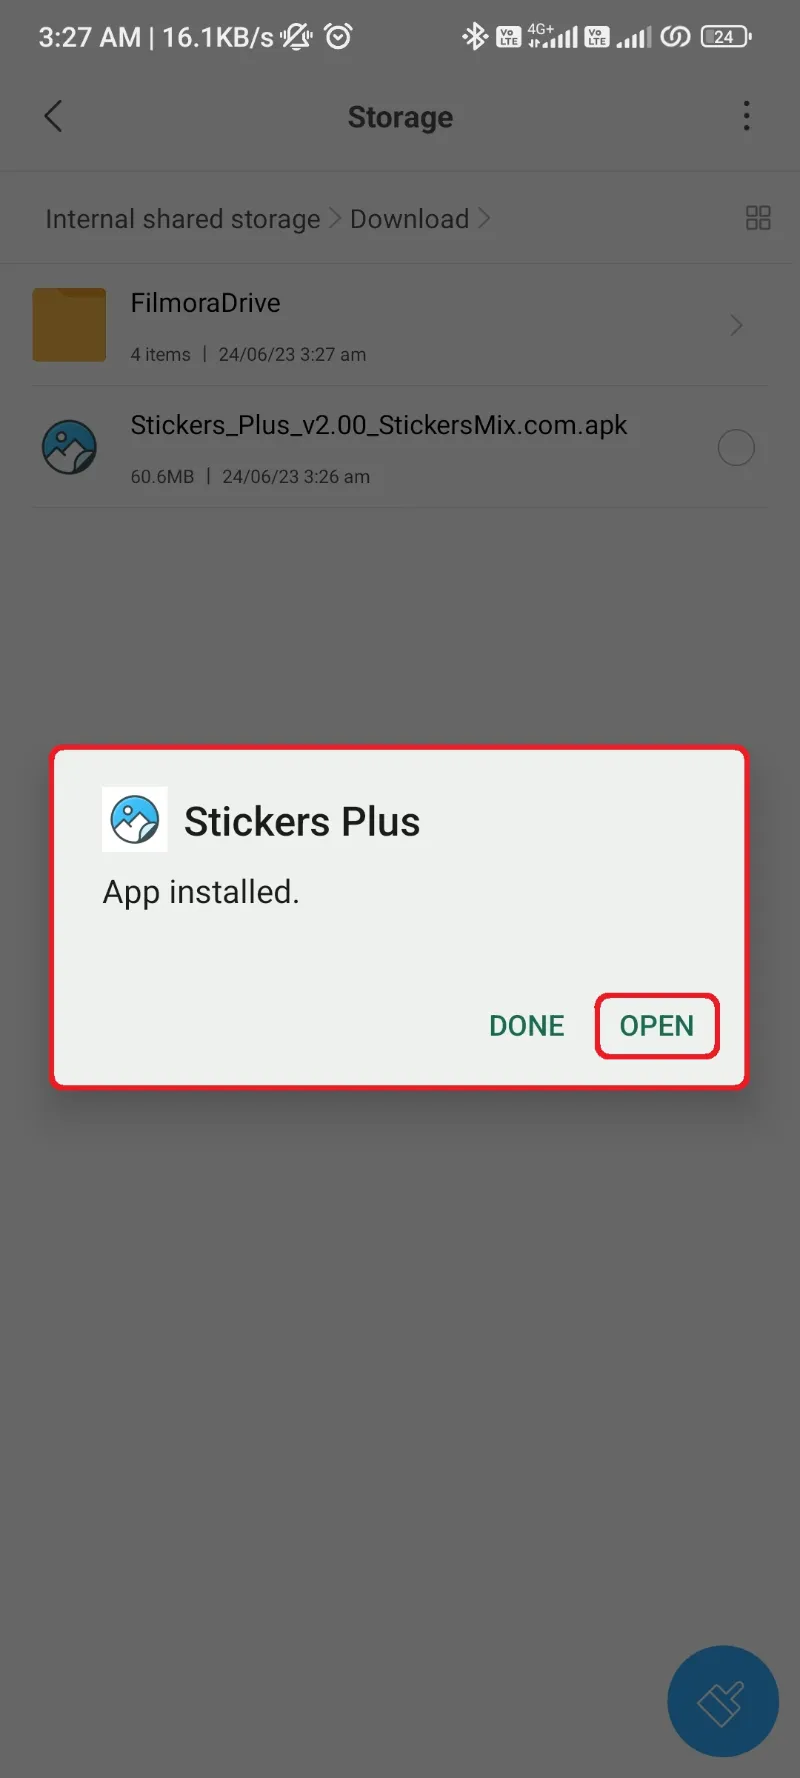 Open Stickers Plus App